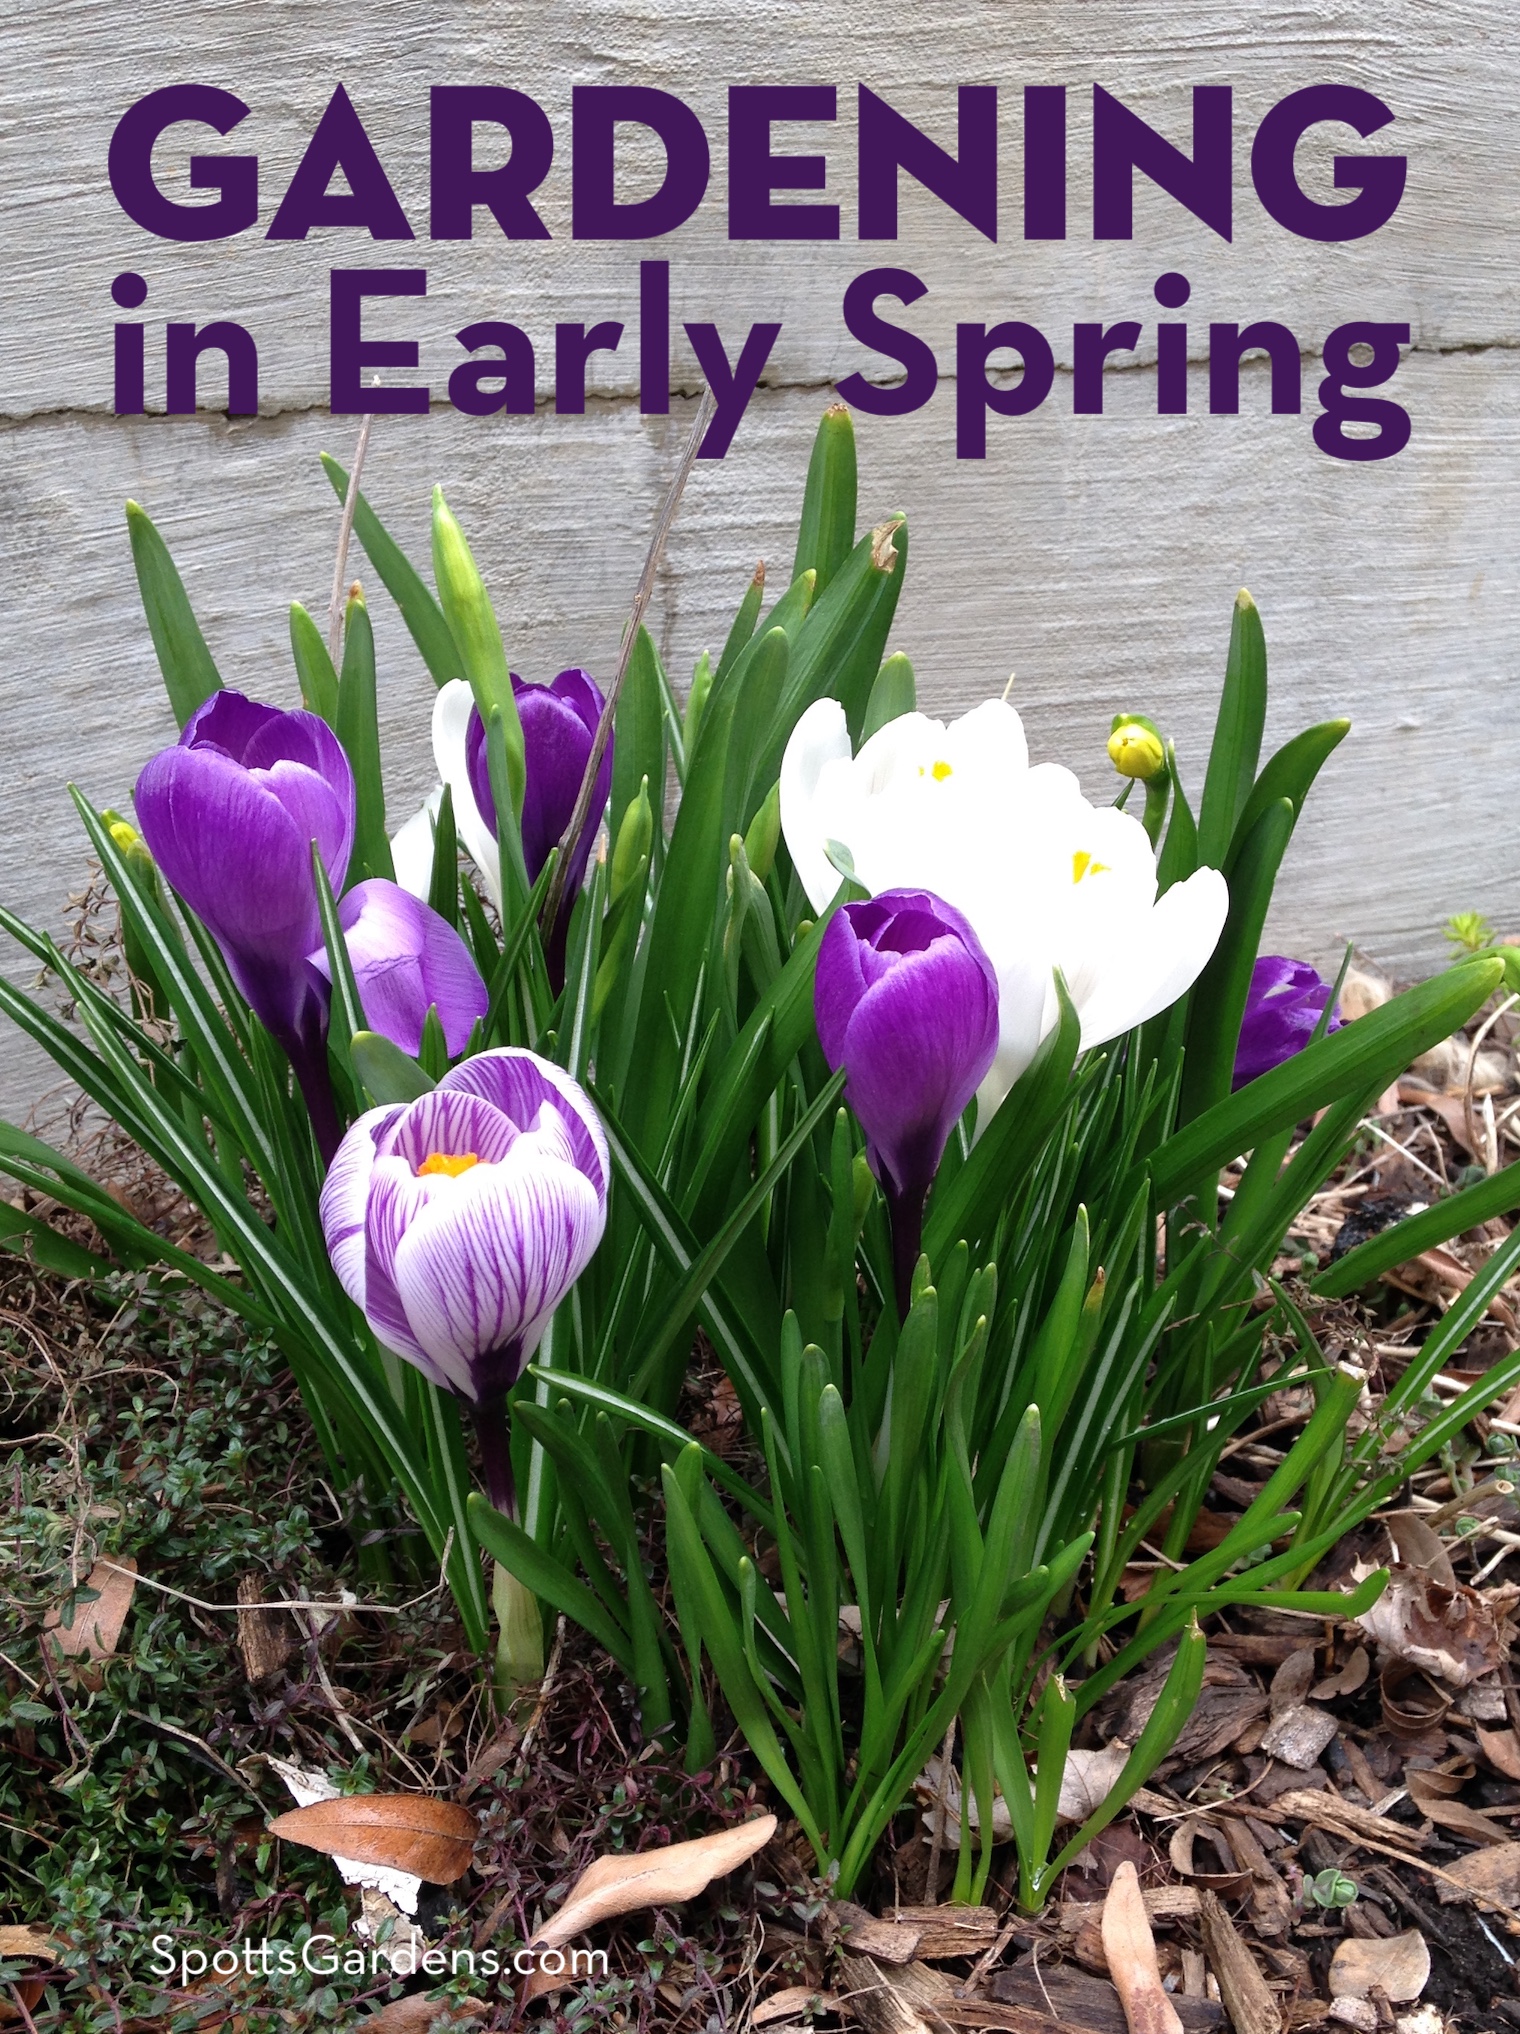 Gardening in Early Spring - Spotts Garden Service